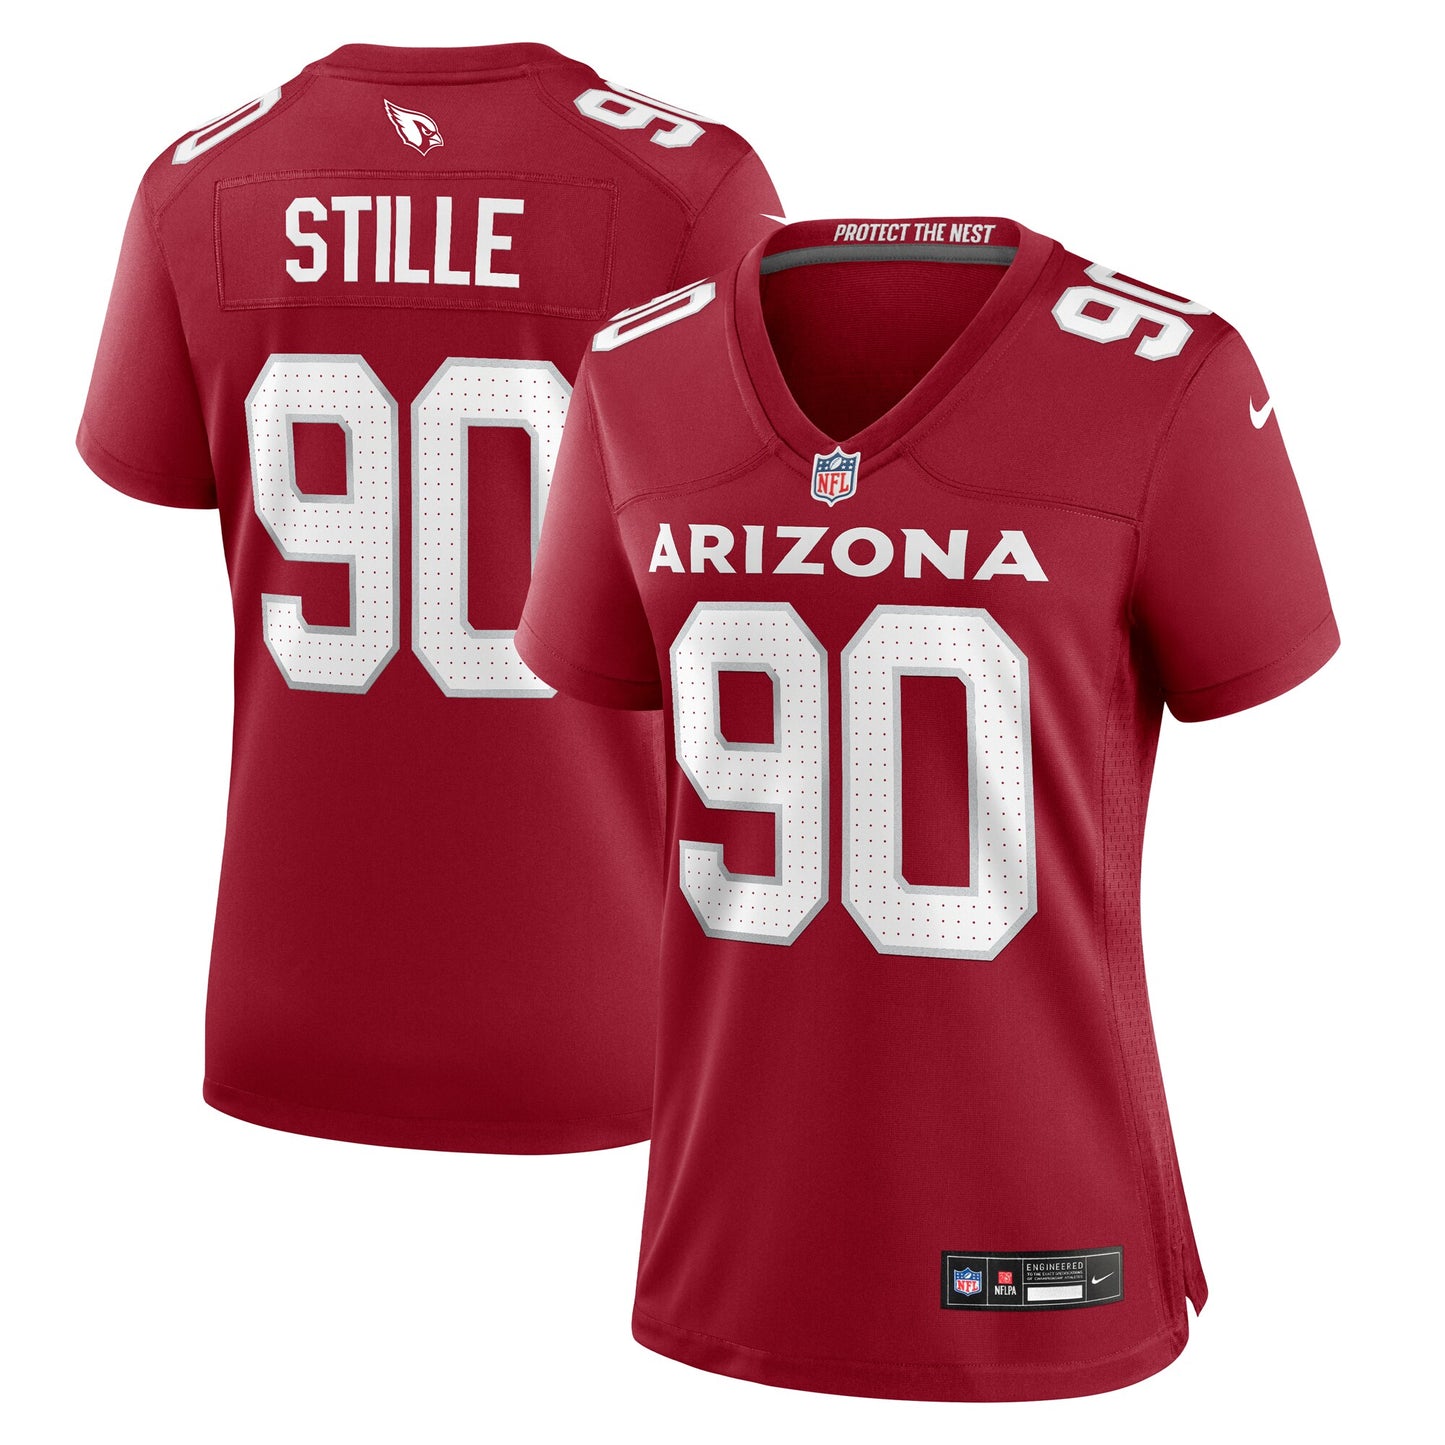 Ben Stille Arizona Cardinals Nike Women's Team Game Jersey - Cardinal